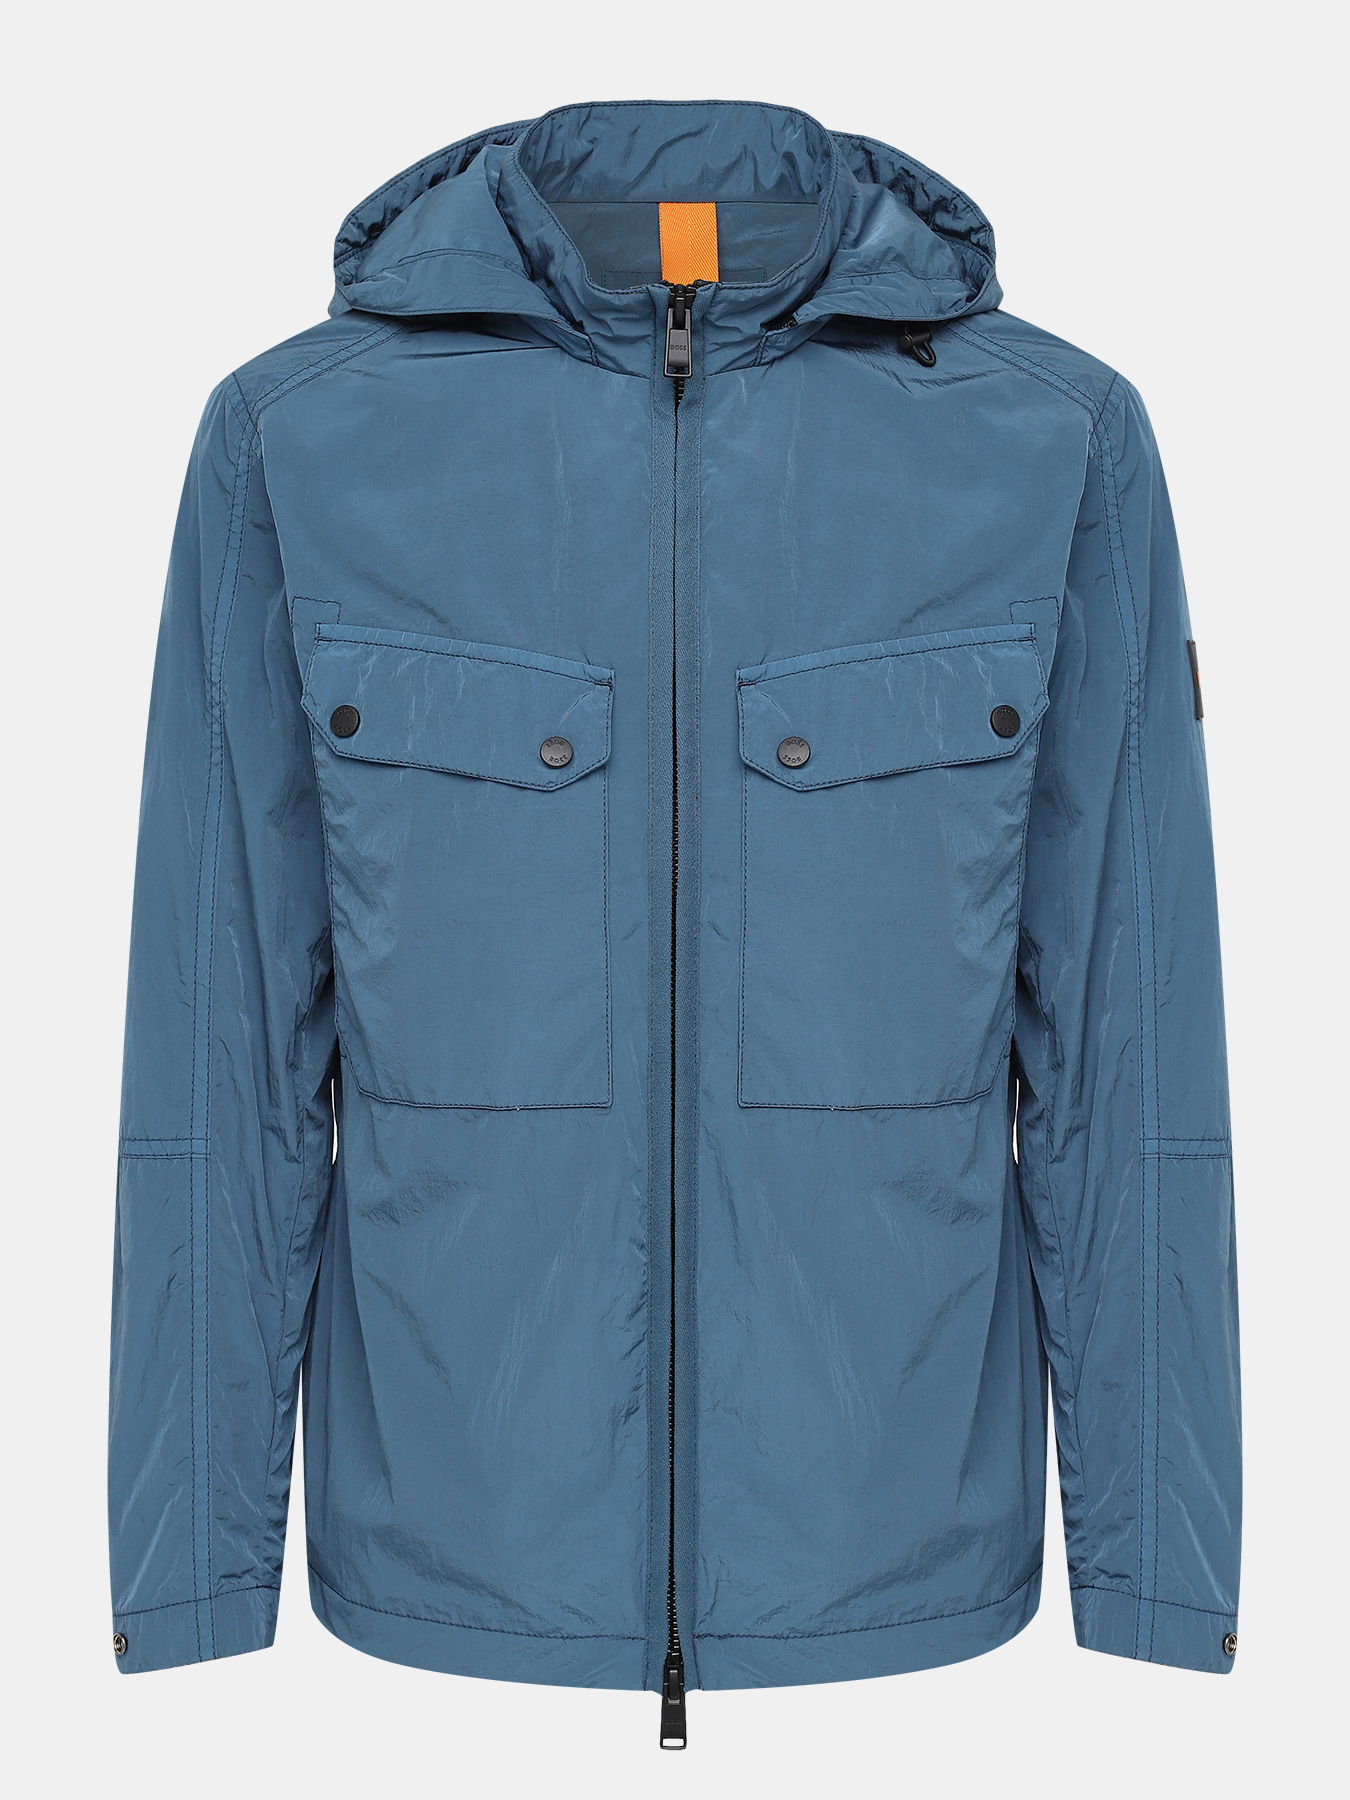 Куртка Odell D BOSS 421179-026, цвет синий, размер 50